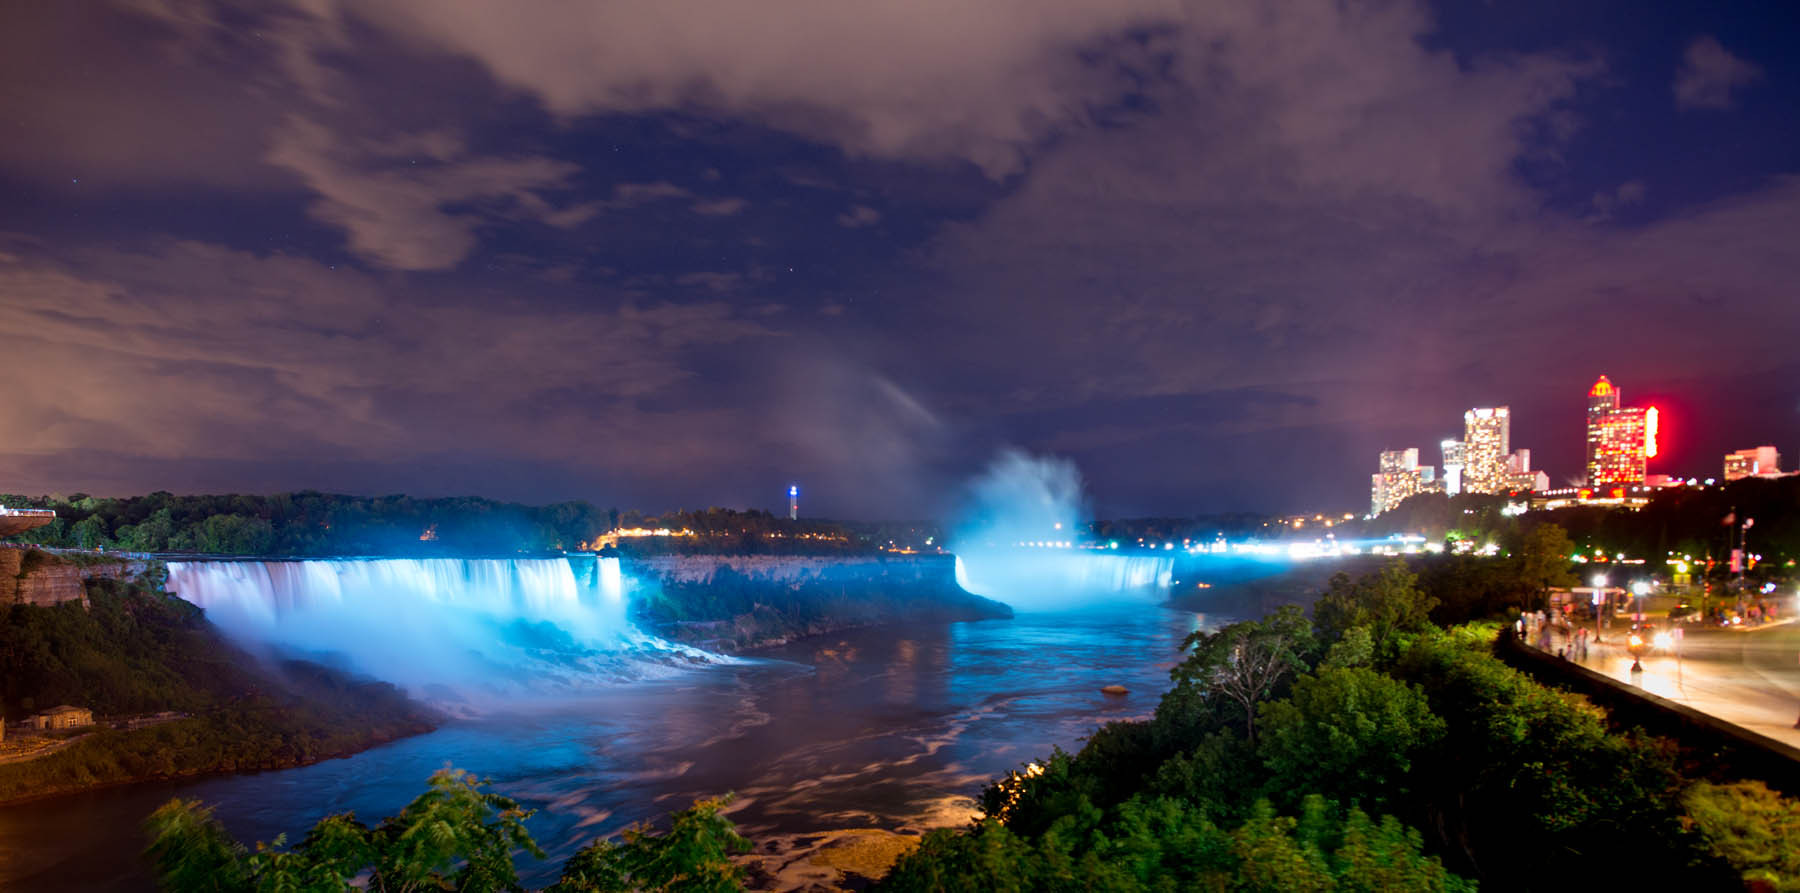 Niagara Falls at Night 11 HD Wallpaper 1800x893